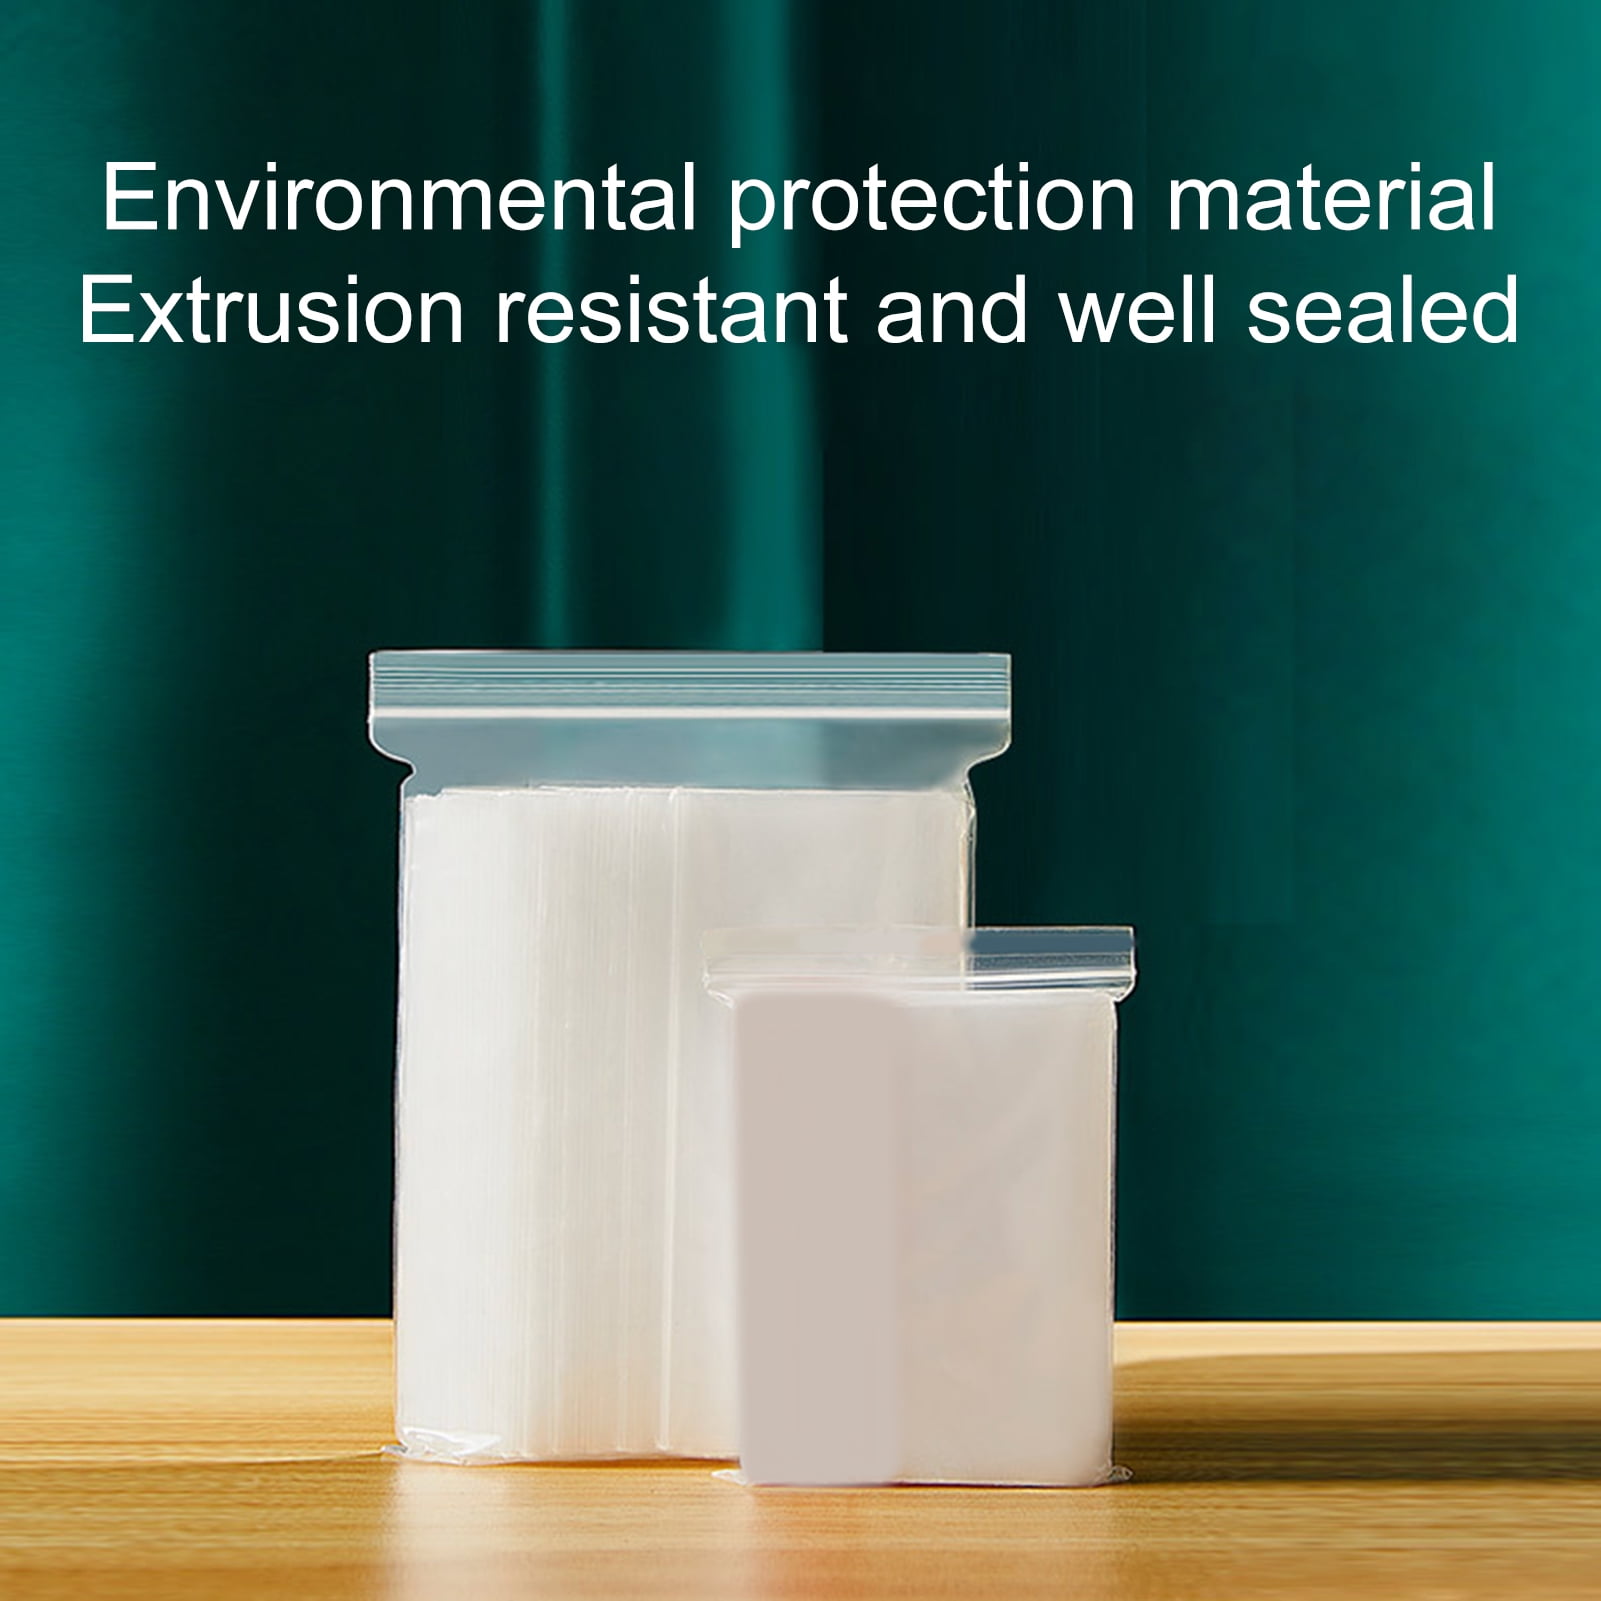 Buy ecoSENSE Reusable Silicone Storage Bags - Leak Proof